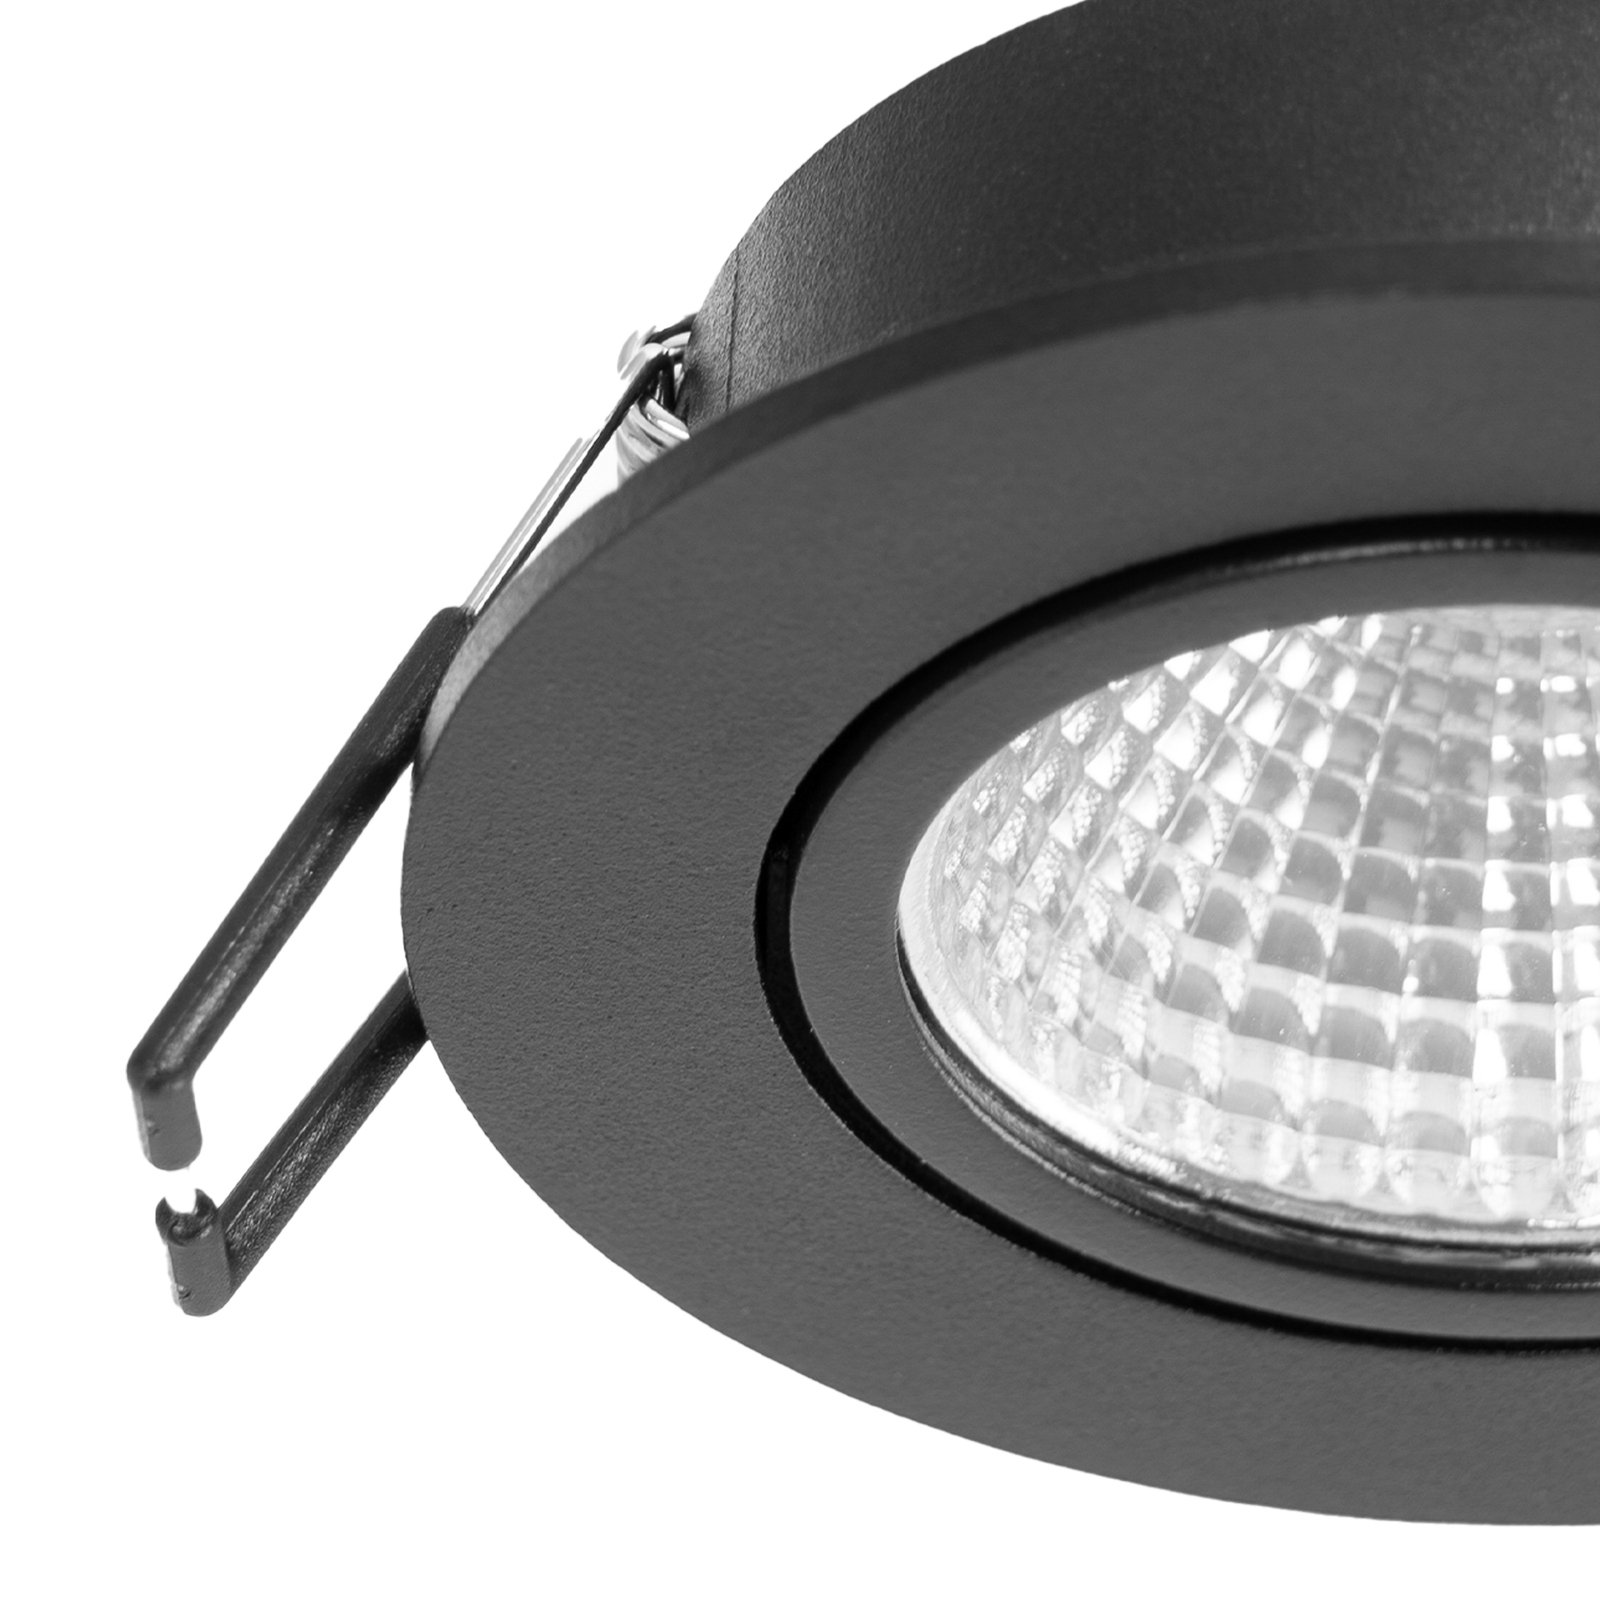 Arcchio LED-es downlight Zarik, fekete, 2700K